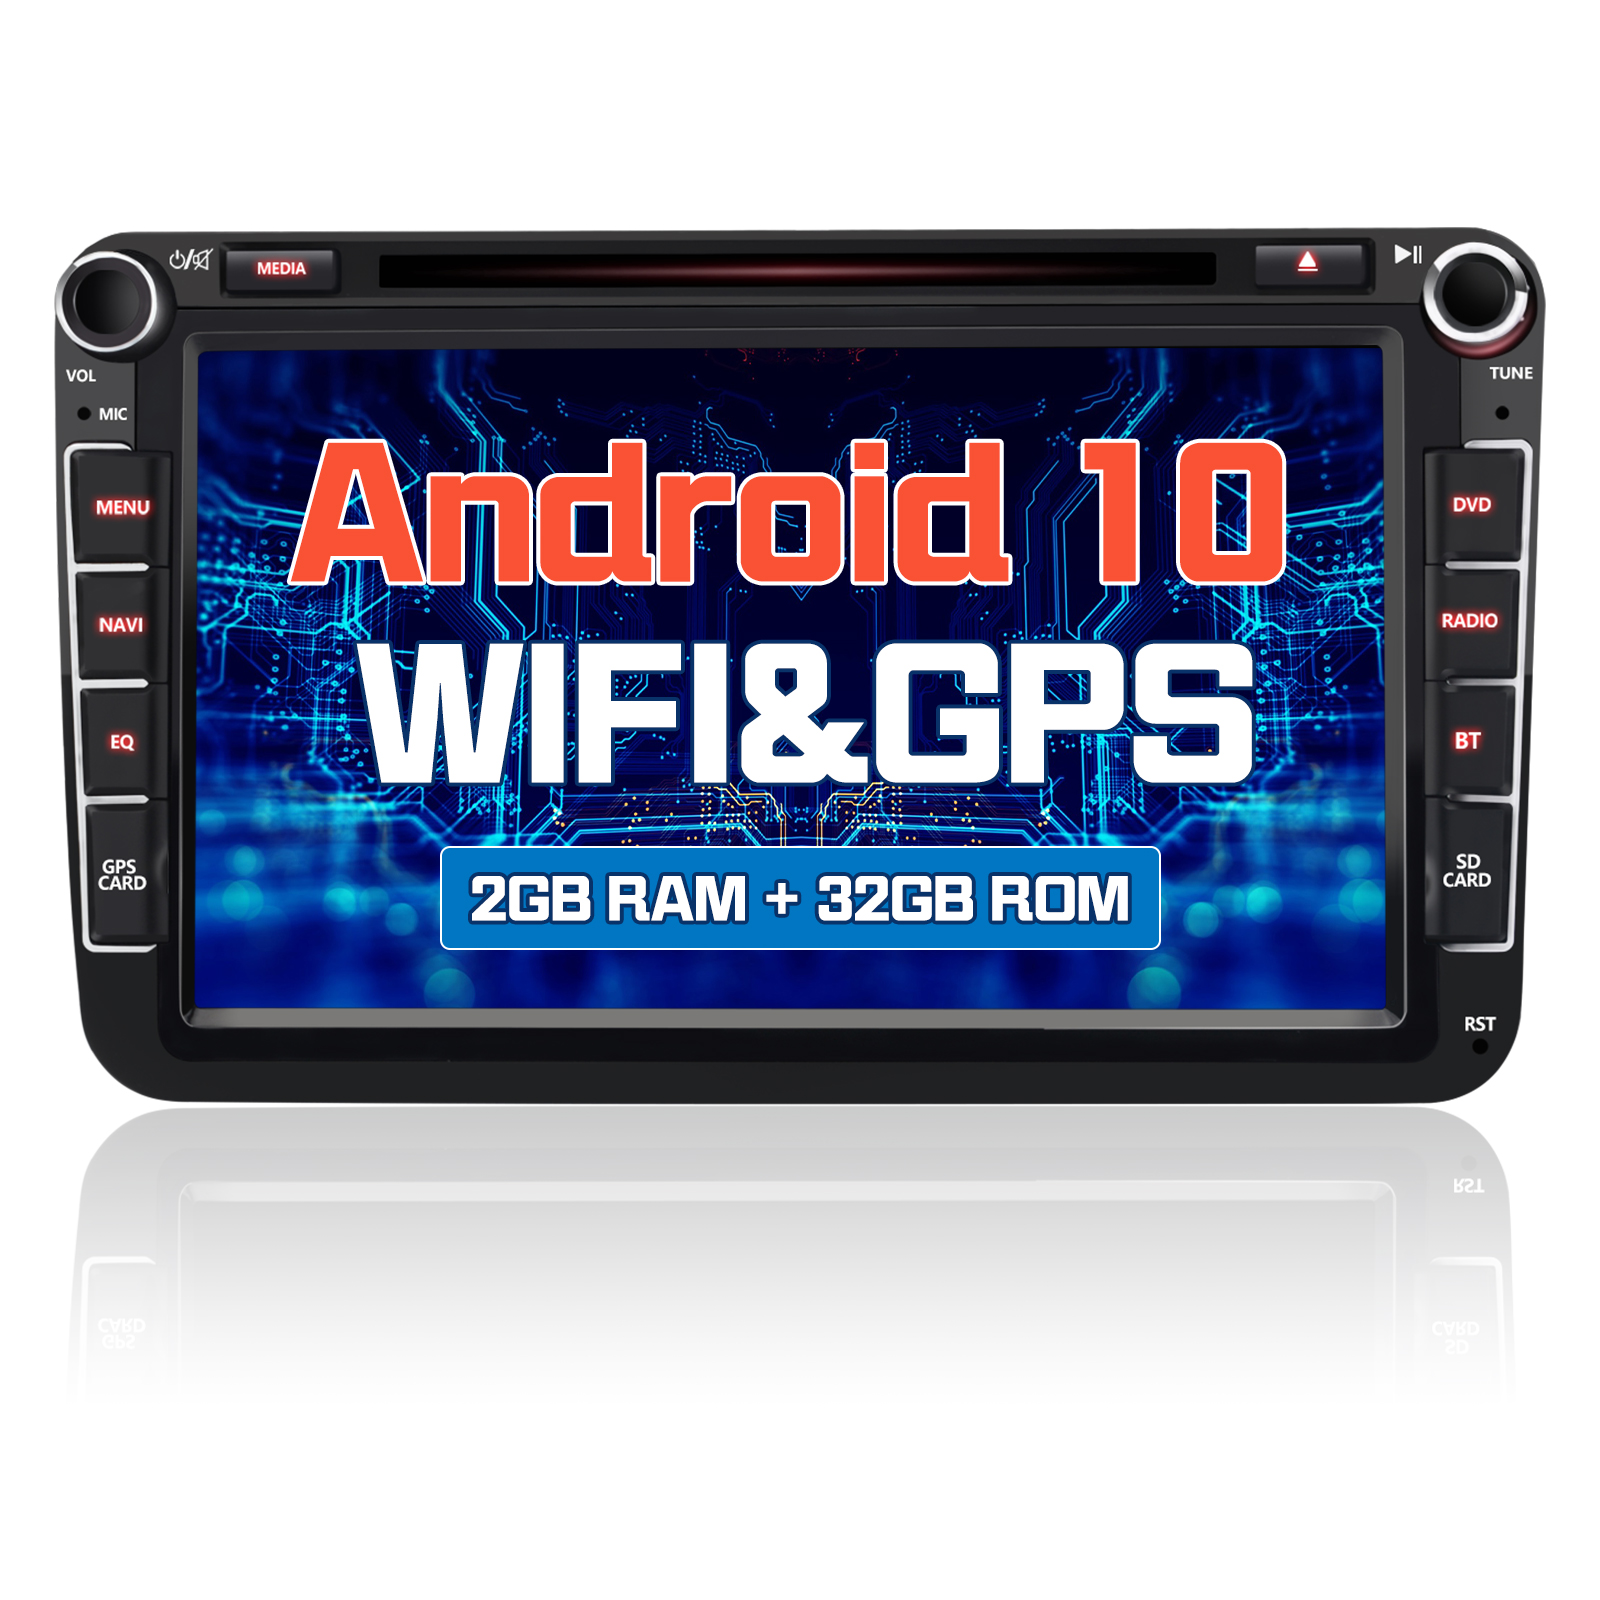 € 224.10 - Android 10 Autoradio für VW Skoda Seat, 2 DIN 8 Zoll Touchscreen  DAB+ unterstützung WLAN DVD USB RDS Bluetooth MirrorLink -  de.awesafeshop.com